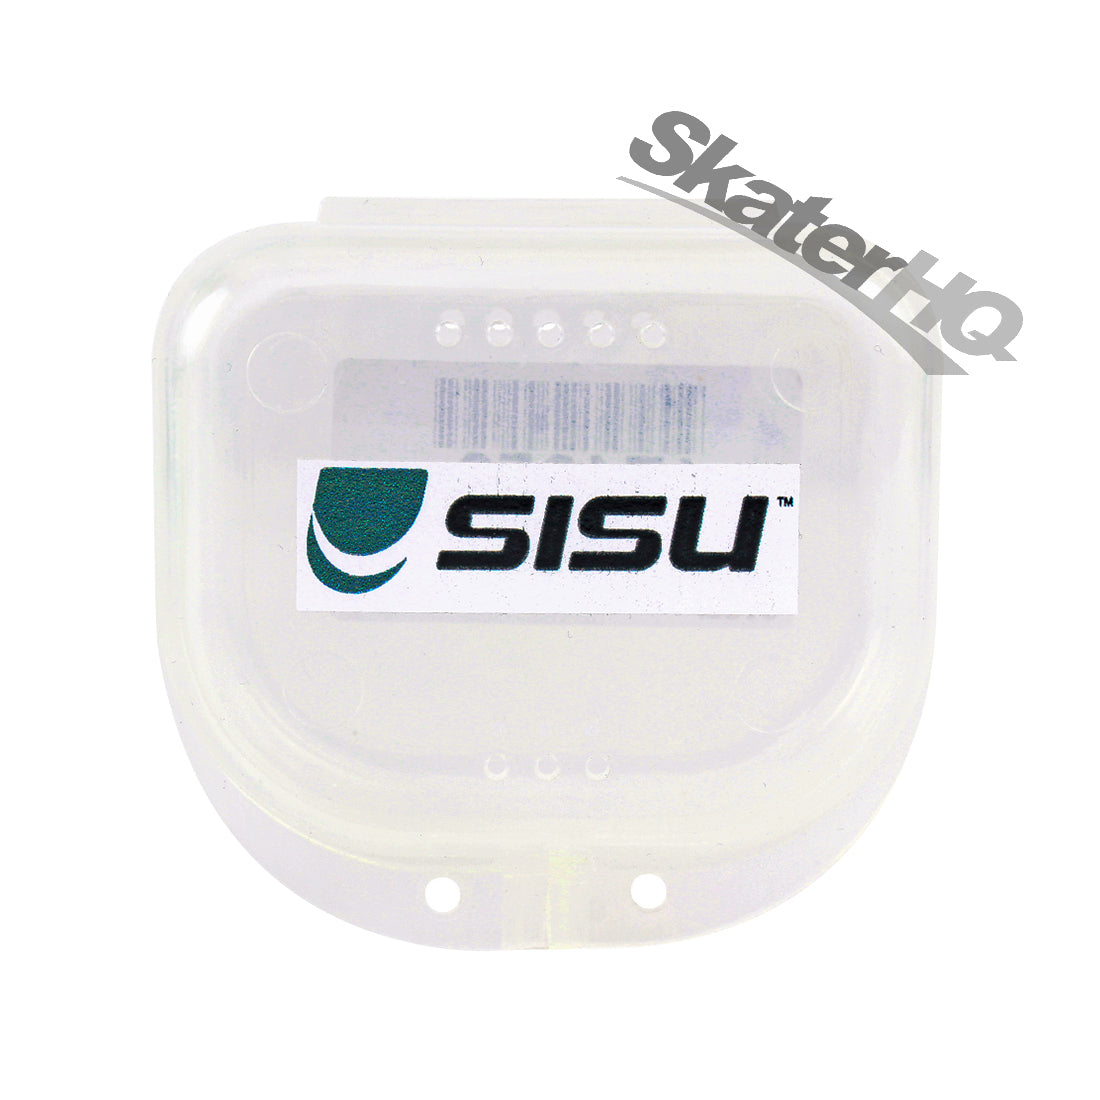 SISU Mouthguard Case - Clear Protective Mouthguards